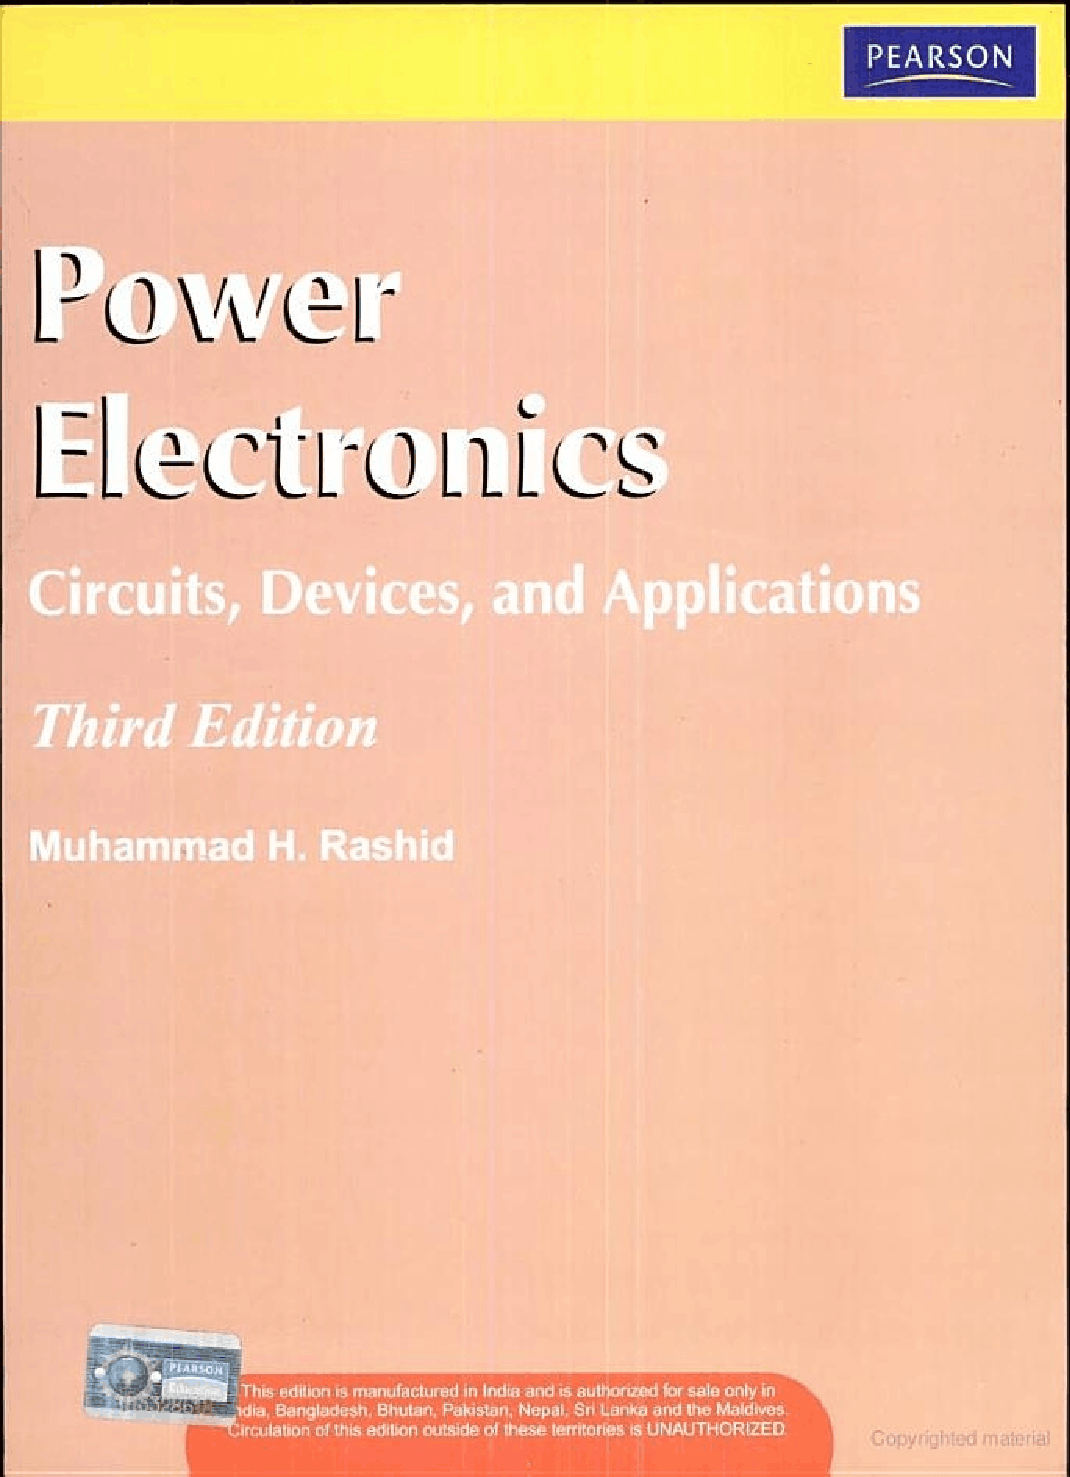 muhammad rashid power electronics pdf